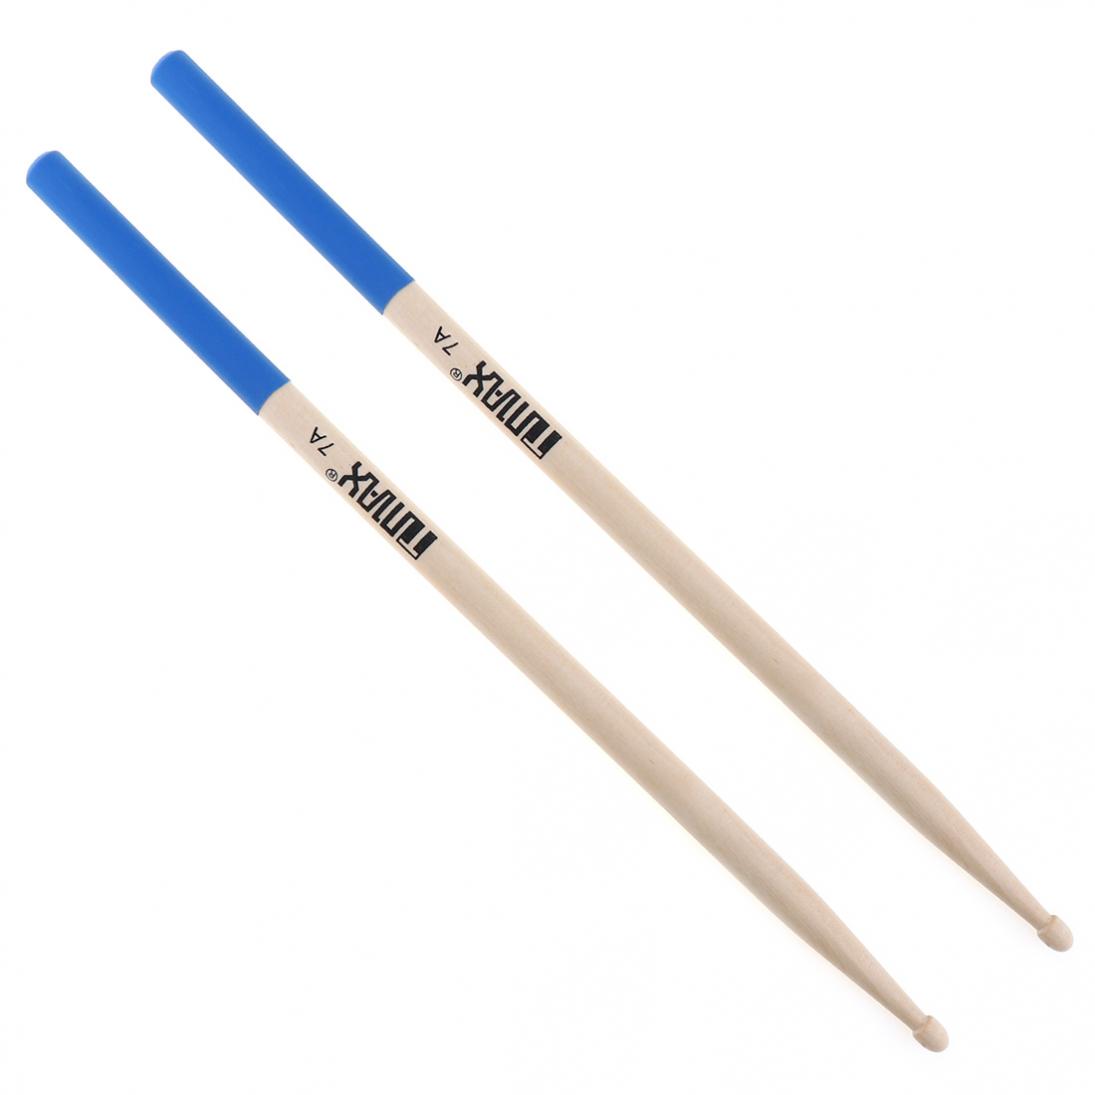 2pcs! 5A 7A Maple Drumsticks Professional Wood Drum Sticks Accessories Percussion Instruments Parts & Accessories